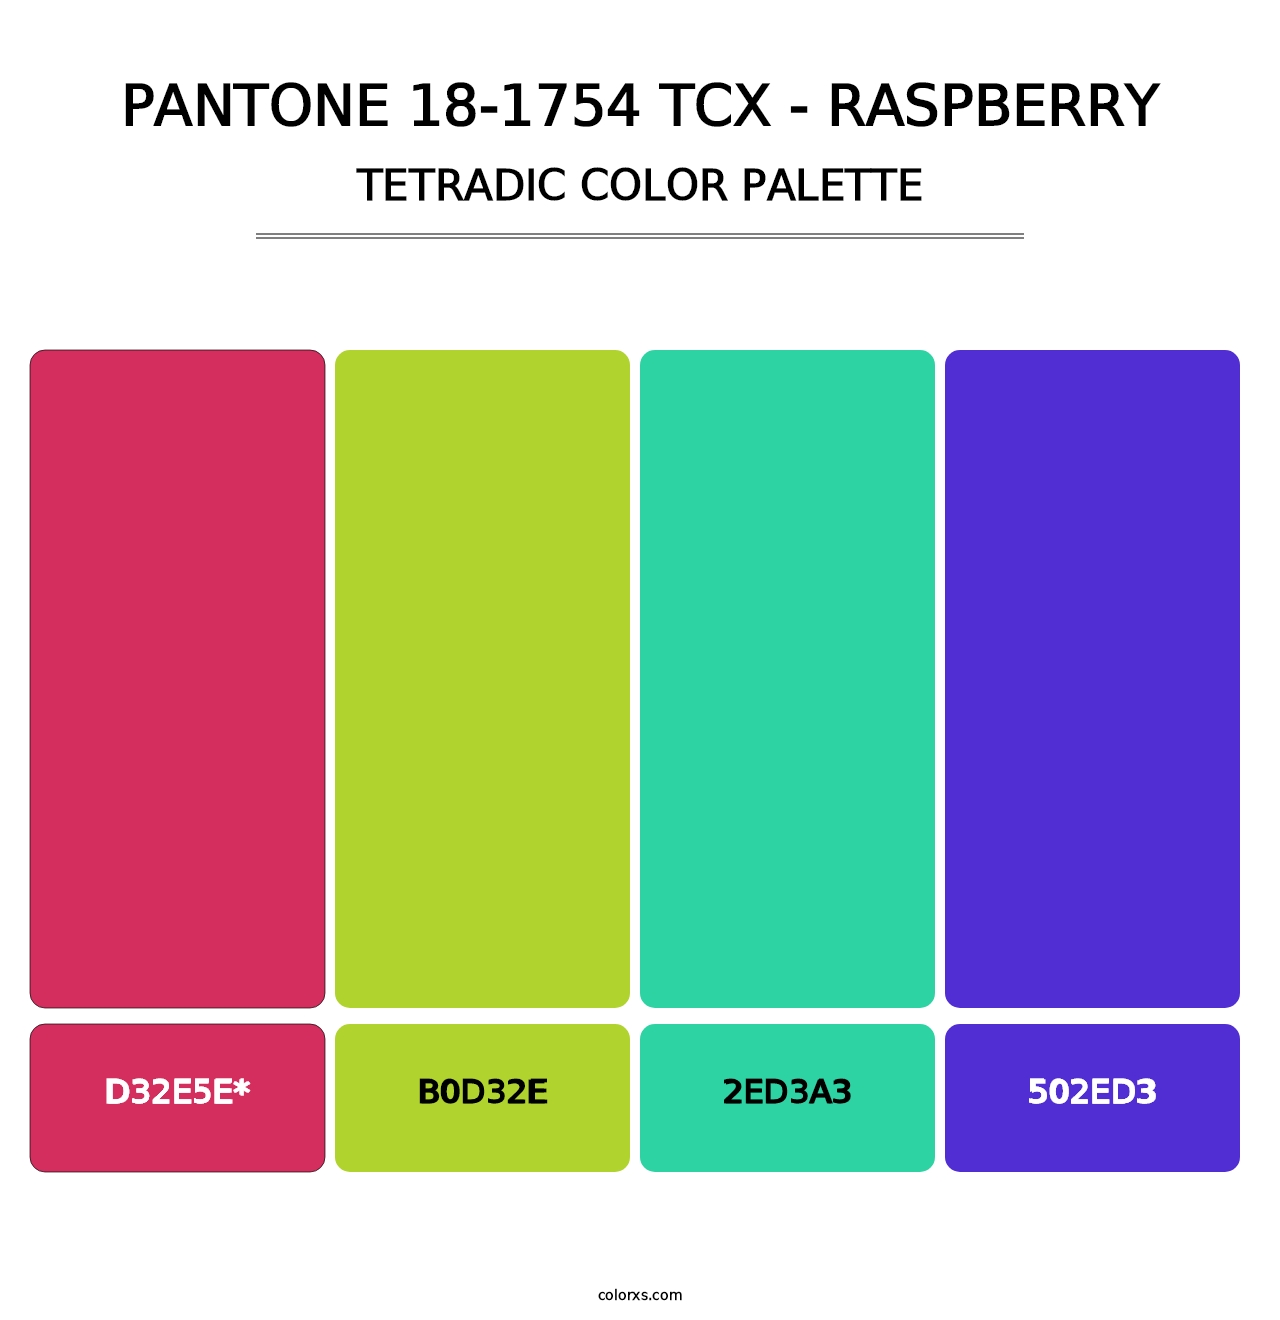 PANTONE 18-1754 TCX - Raspberry - Tetradic Color Palette